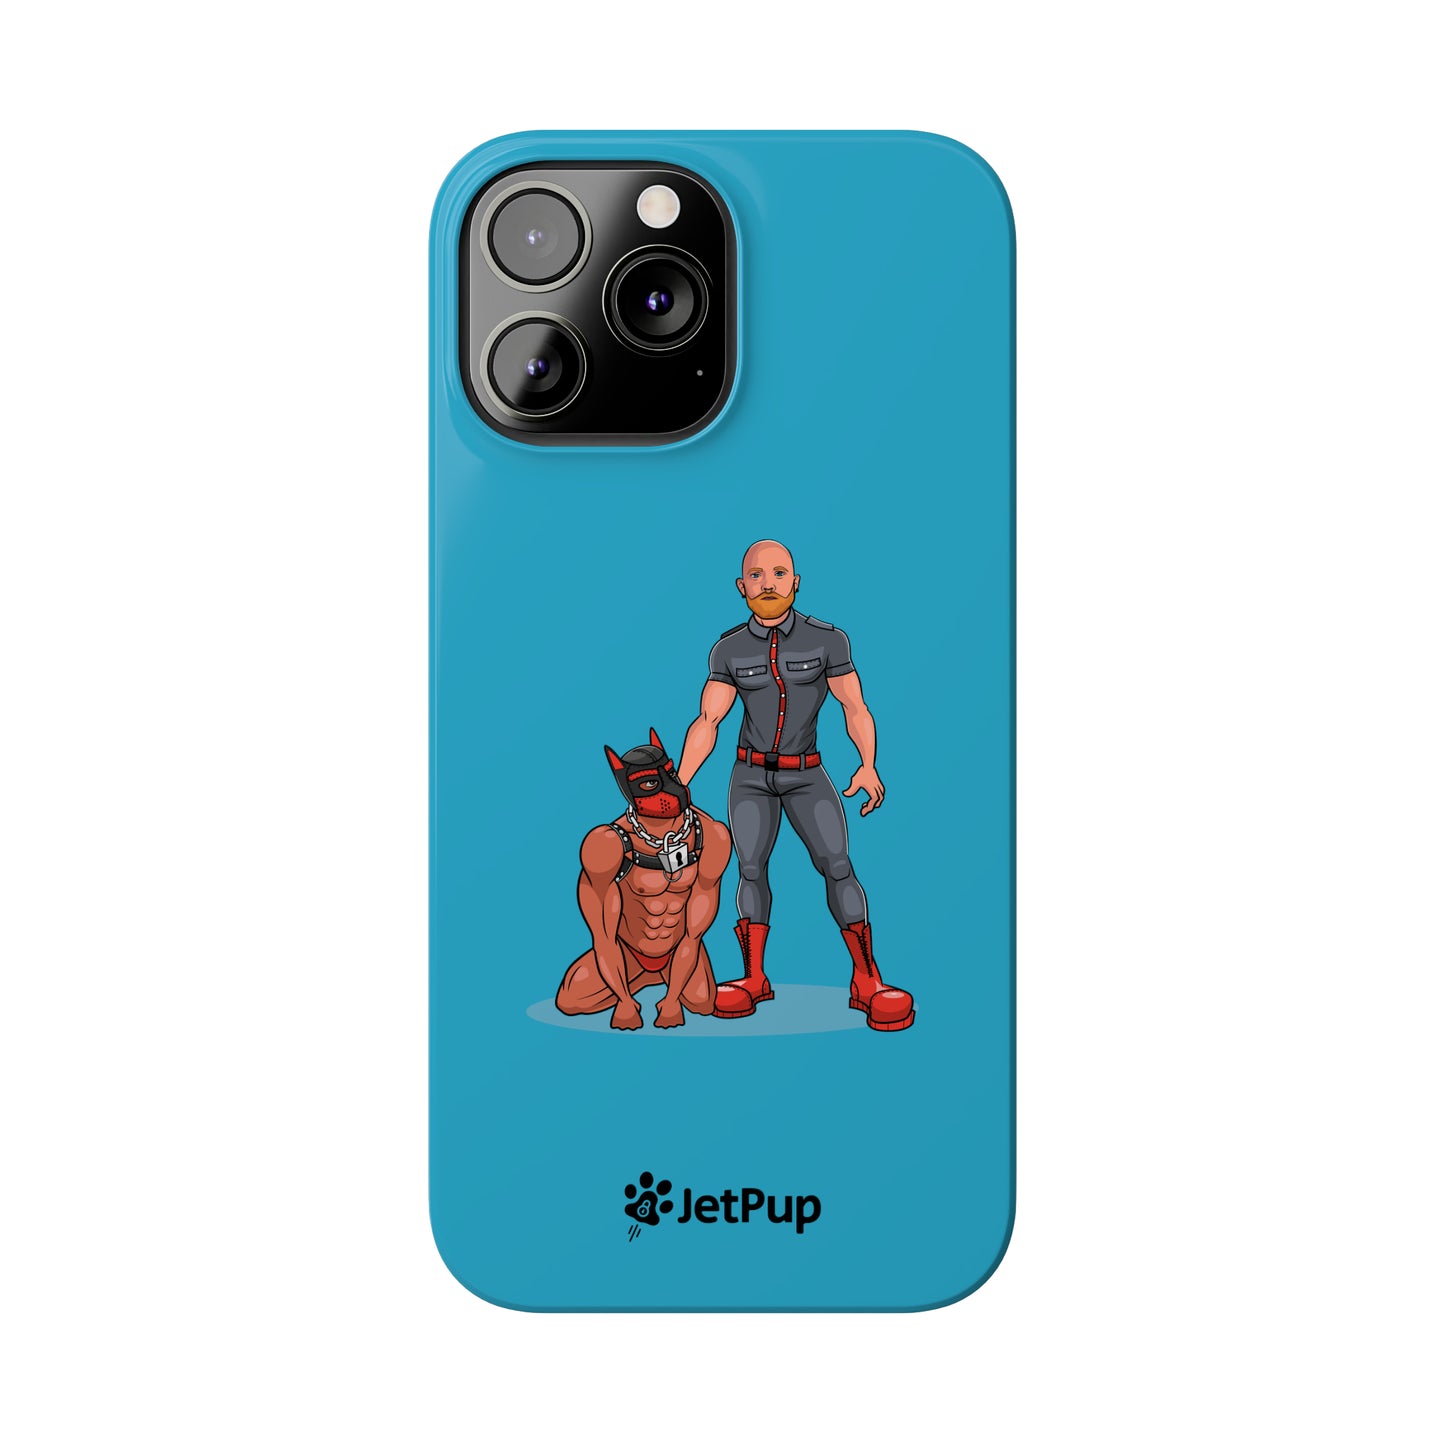 Dad & Pup Slim iPhone Cases - Turquoise